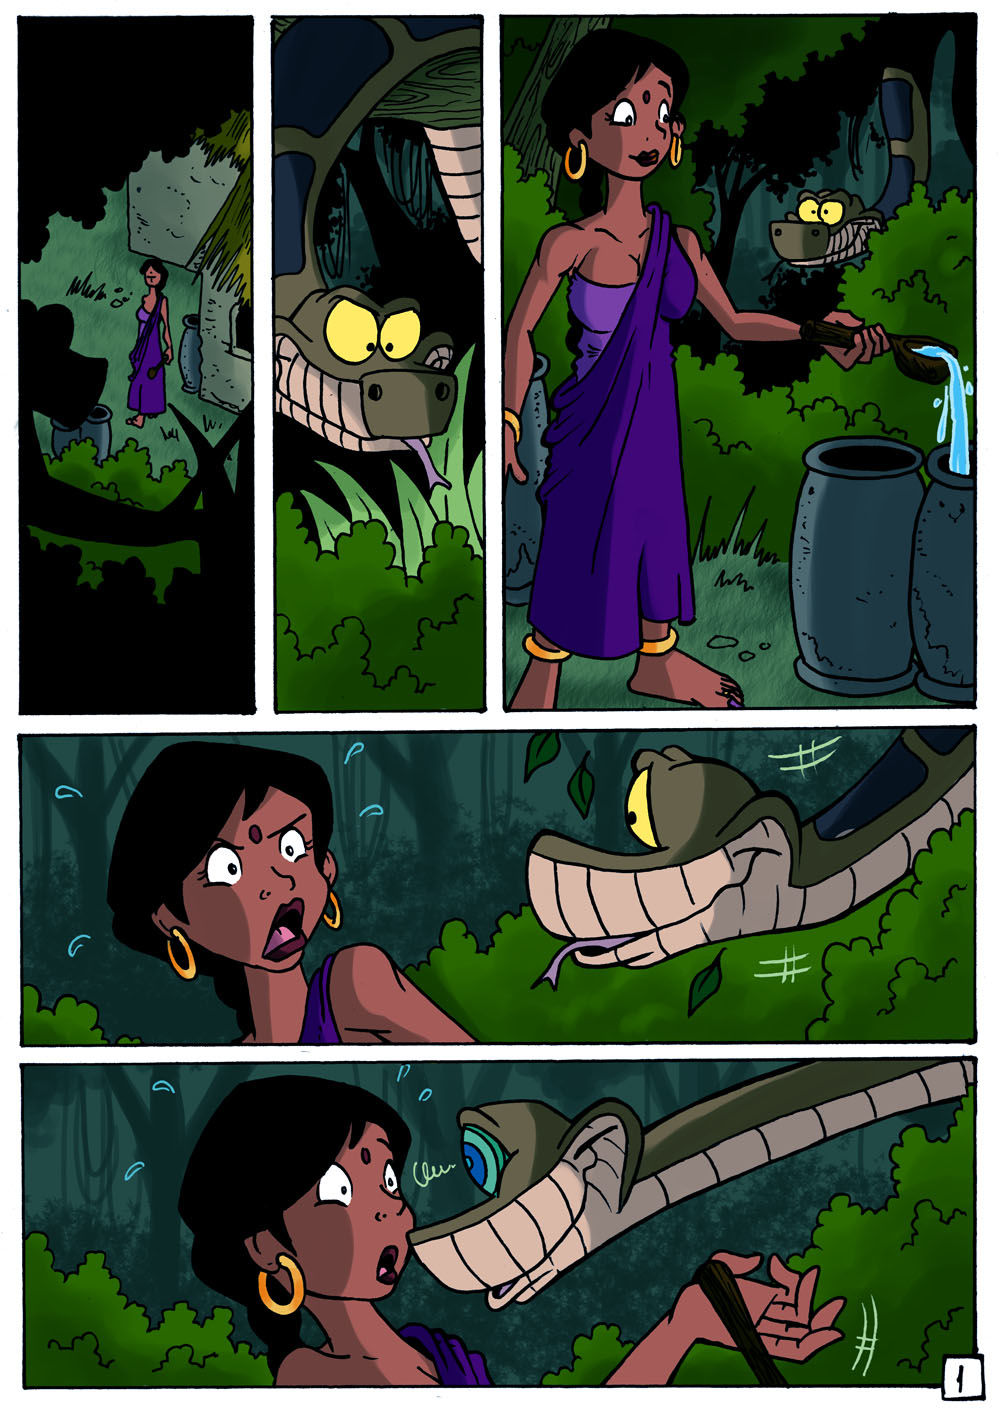 [Jinkslizard] The Jungle Book - Kaa and Shanti page 1